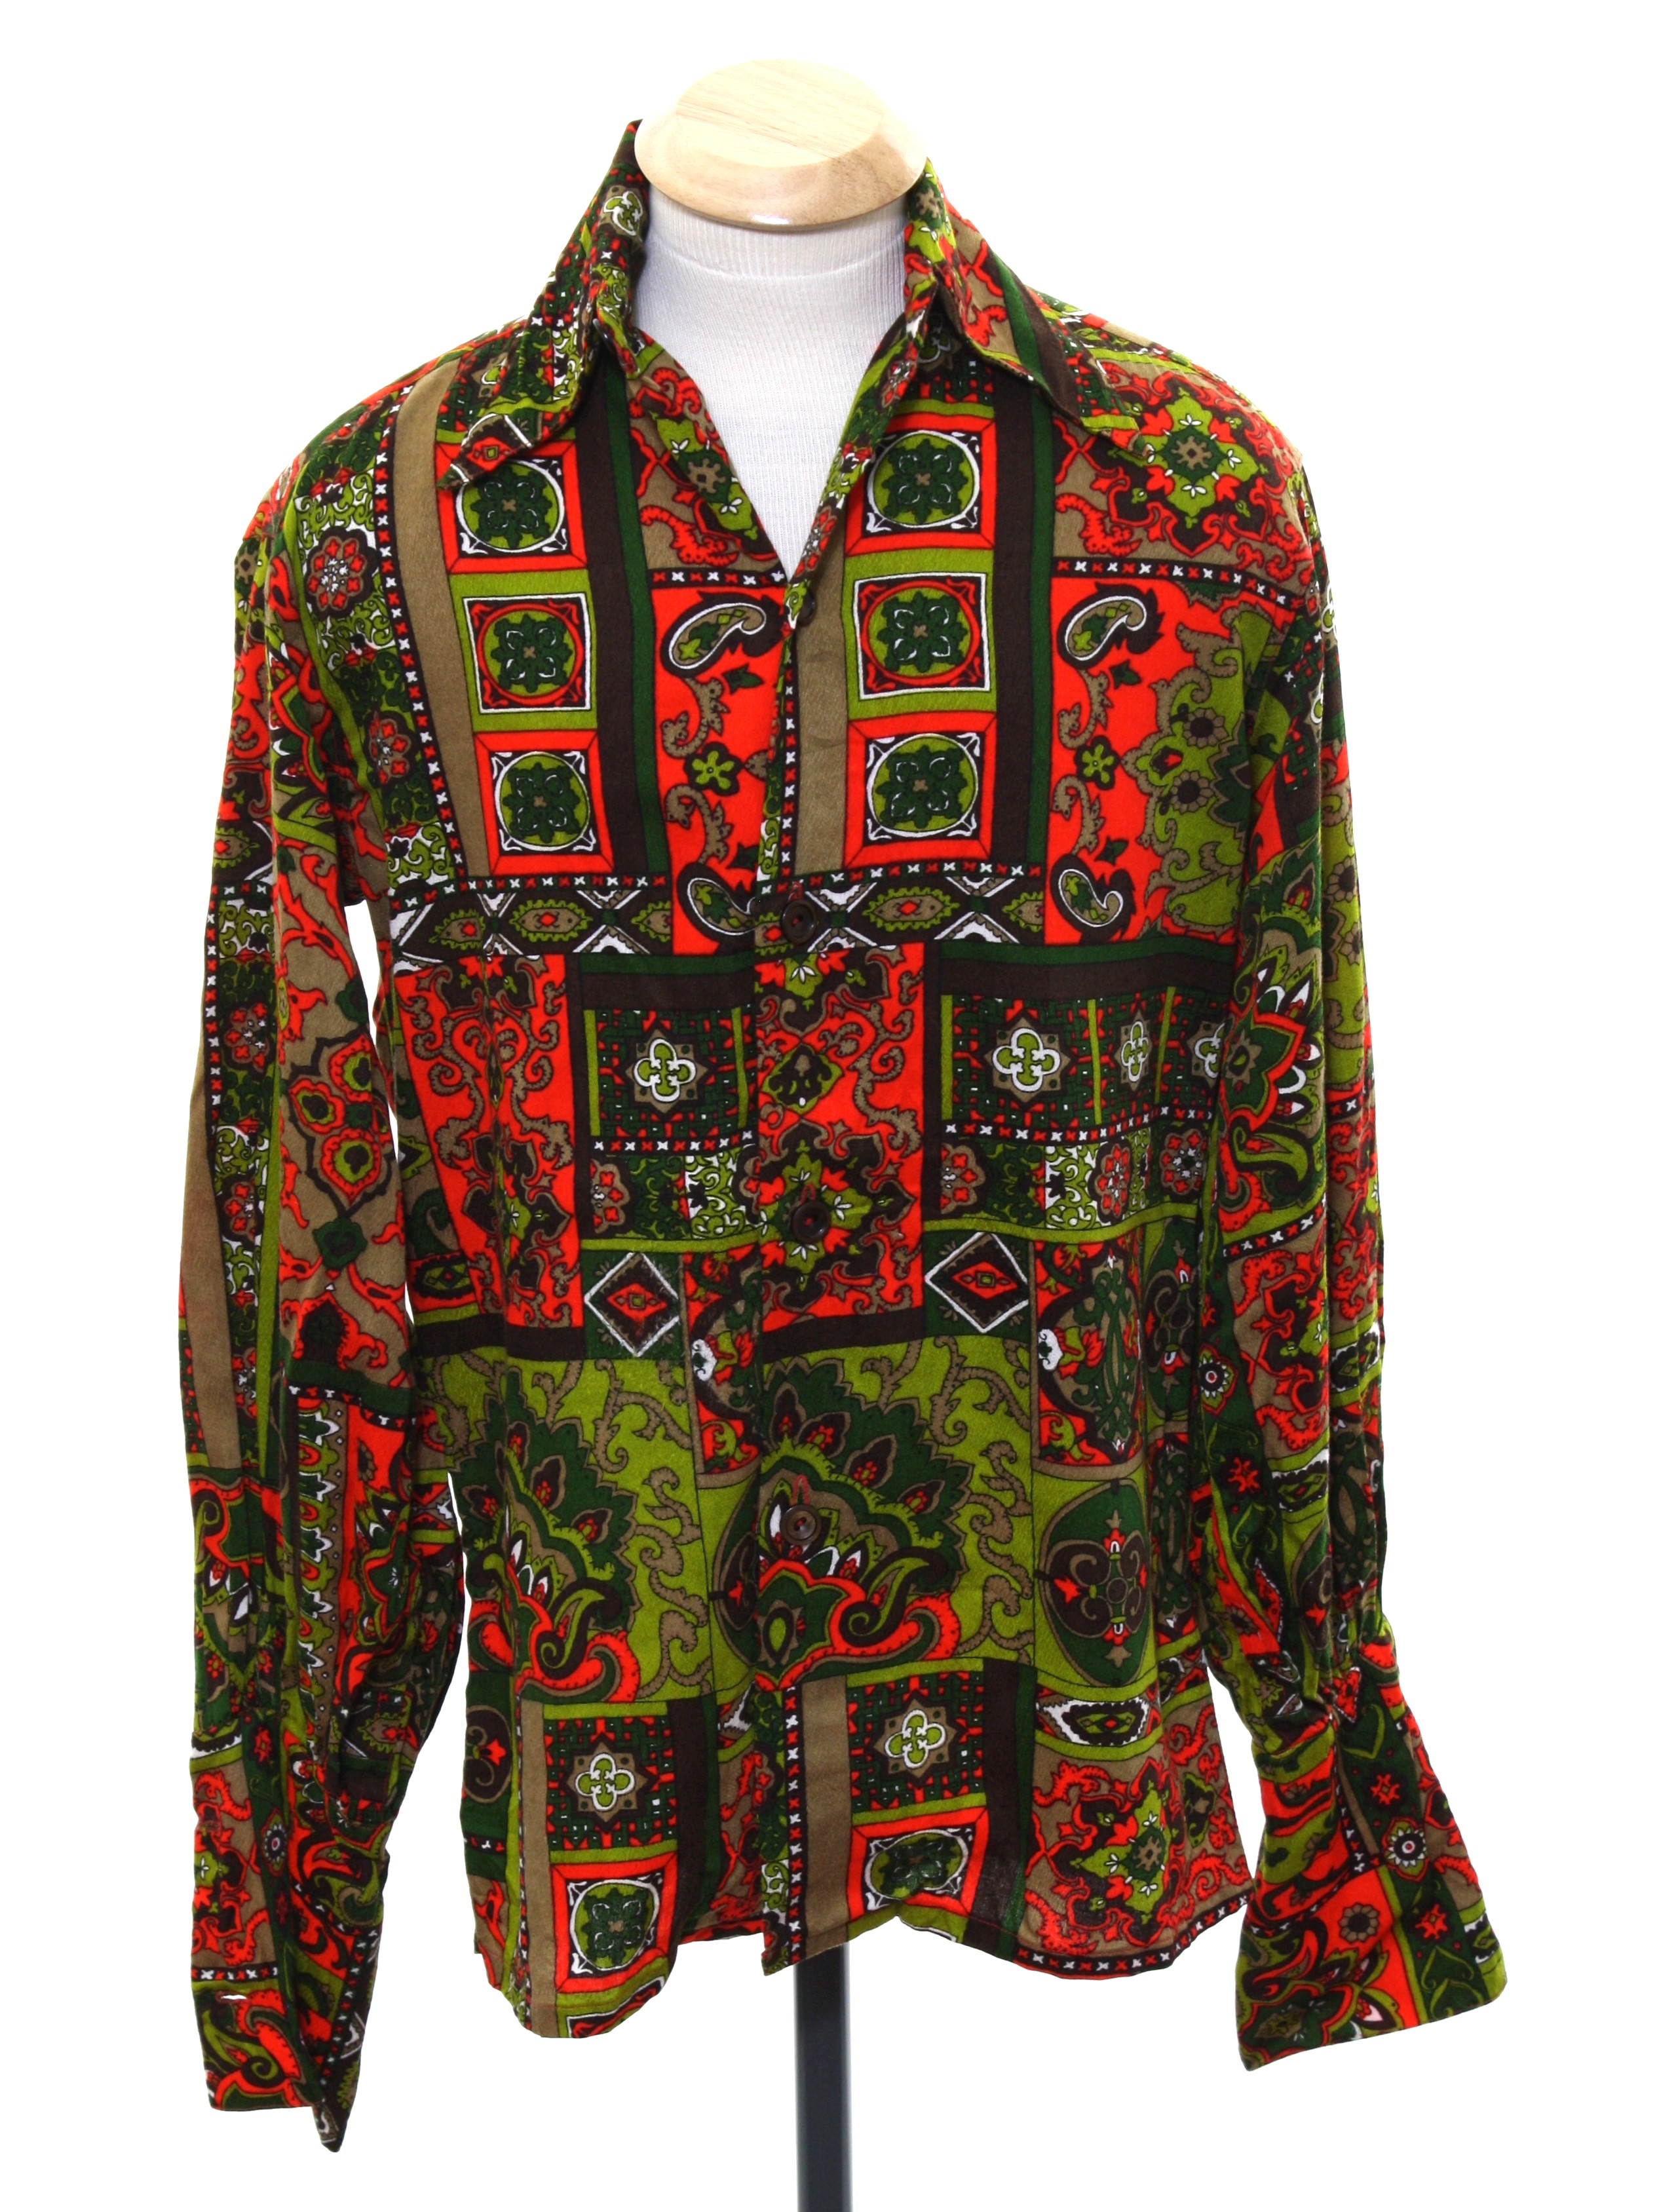 Retro 1970's Hippie Shirt (Home Sewn) : Early 70s -Home Sewn- Mens ...